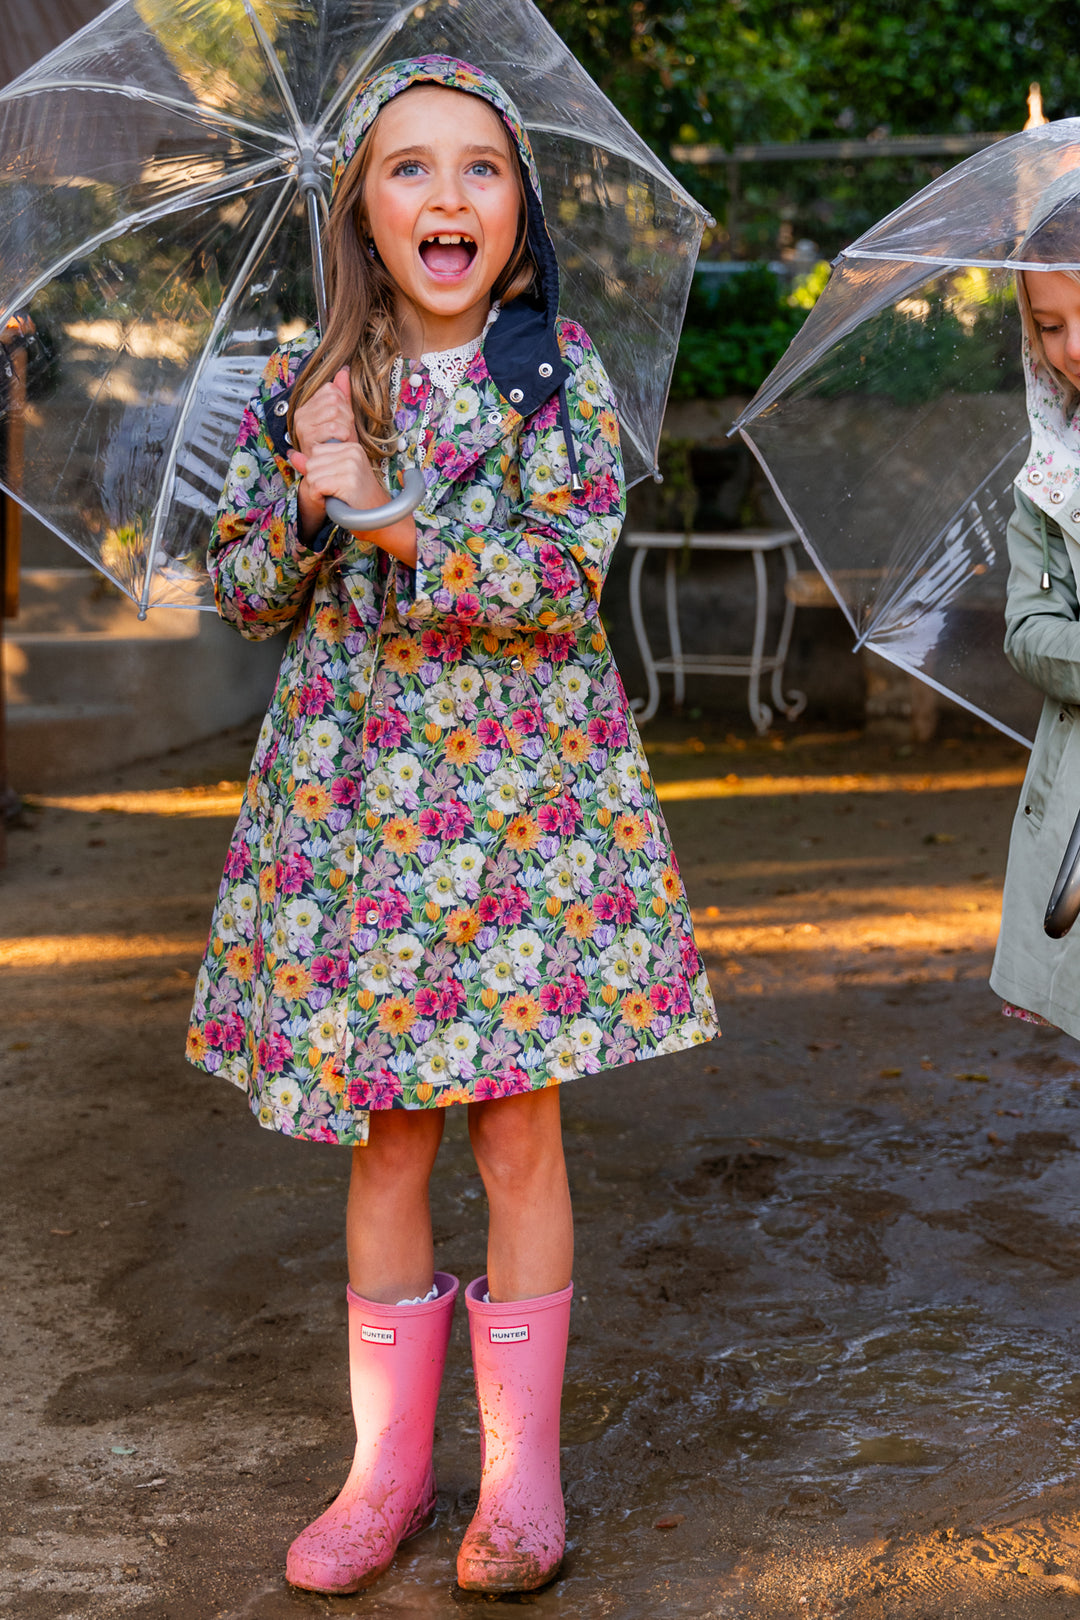 Mini London Raincoat Made With Liberty Fabric